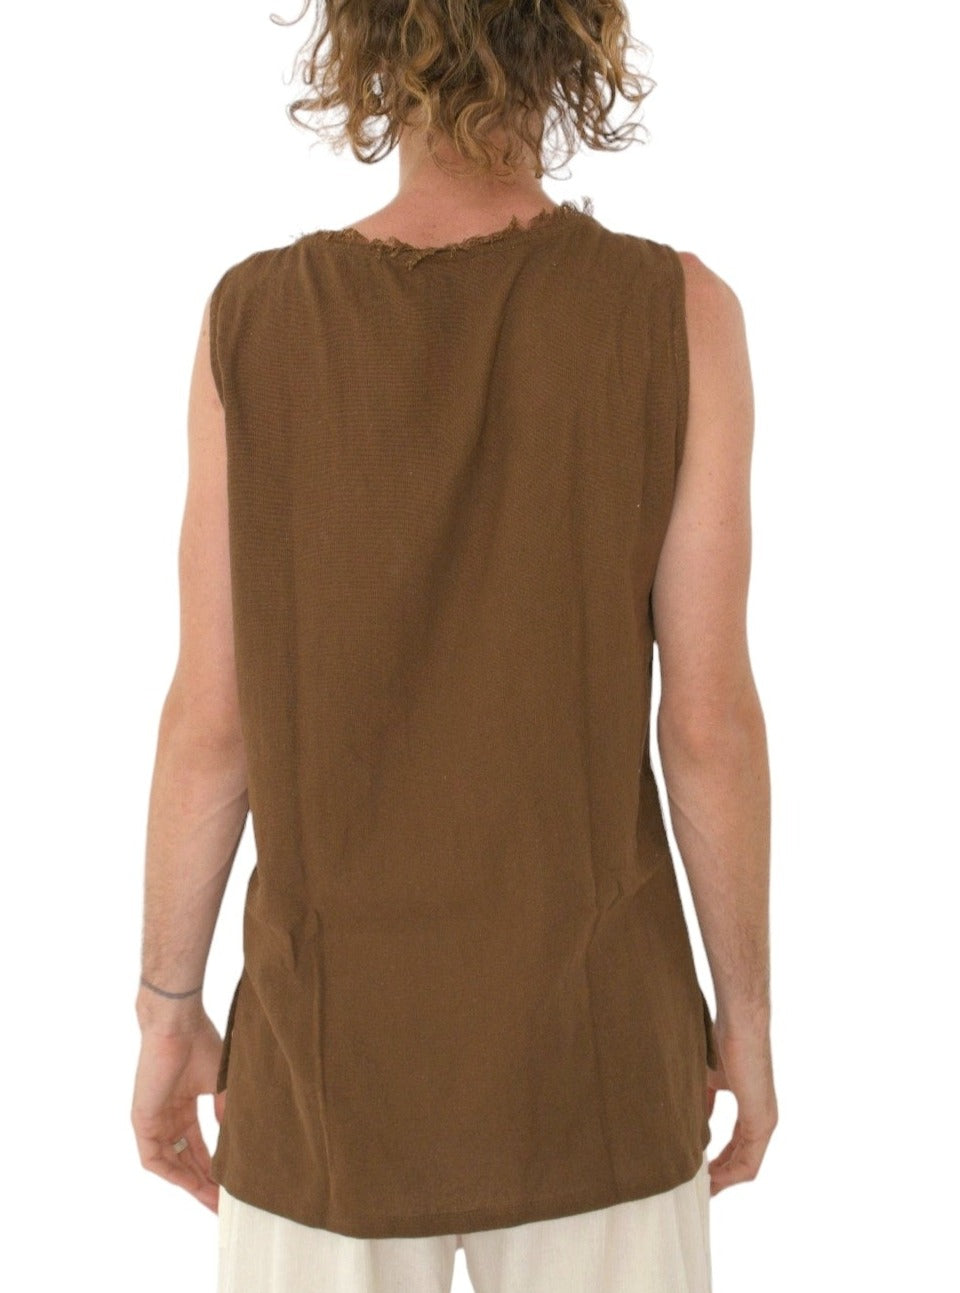 Men's Organic Cotton Sleeveless Shirt in Cacao